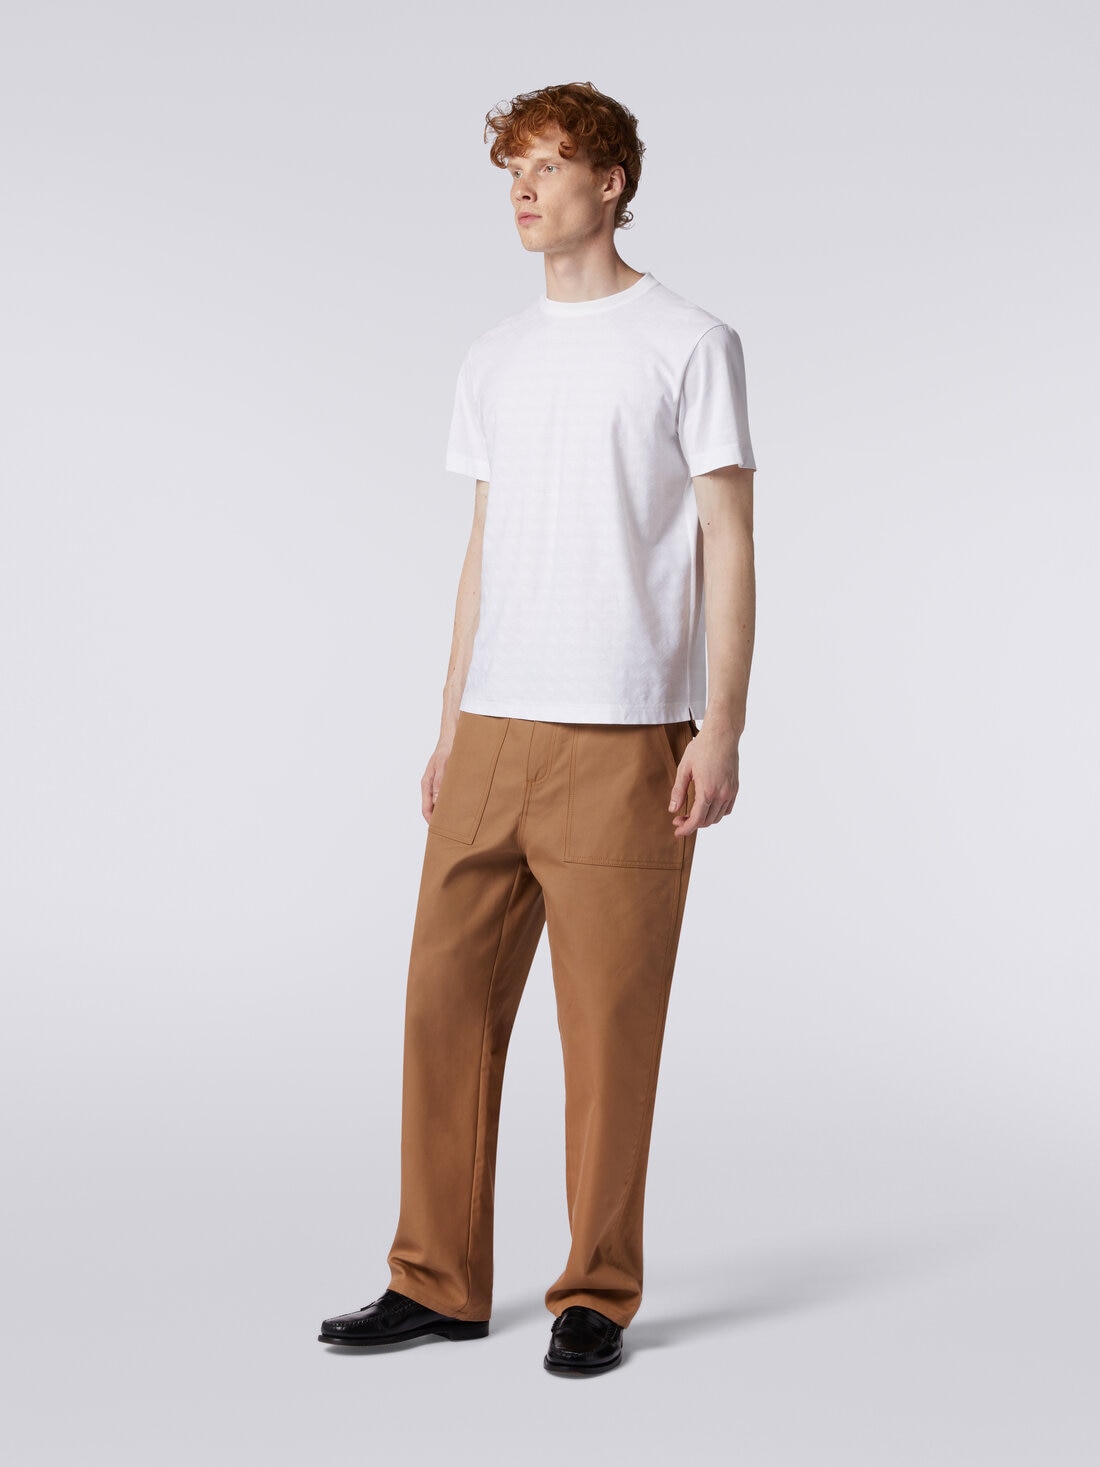 Short-sleeved T-shirt in zigzag cotton, White  - US24SL0CBJ00B4S01BI - 2